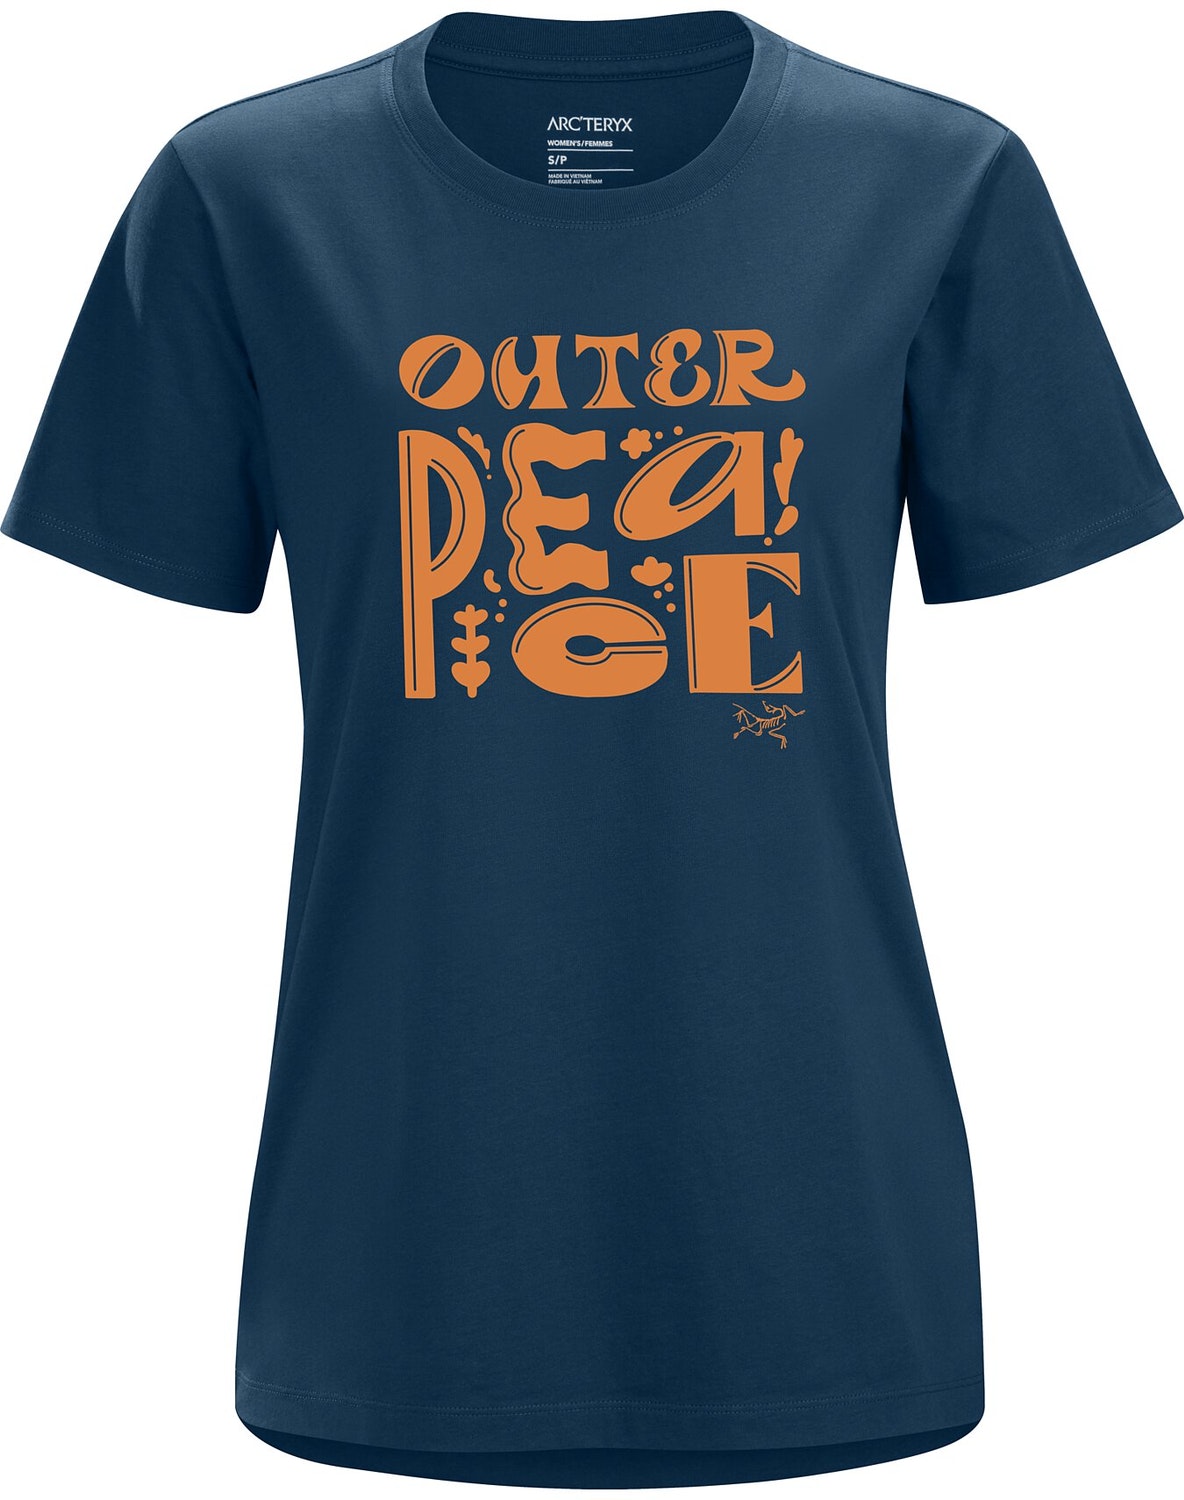 T-shirt Arc'teryx Outer Peace Donna Blu - IT-33354